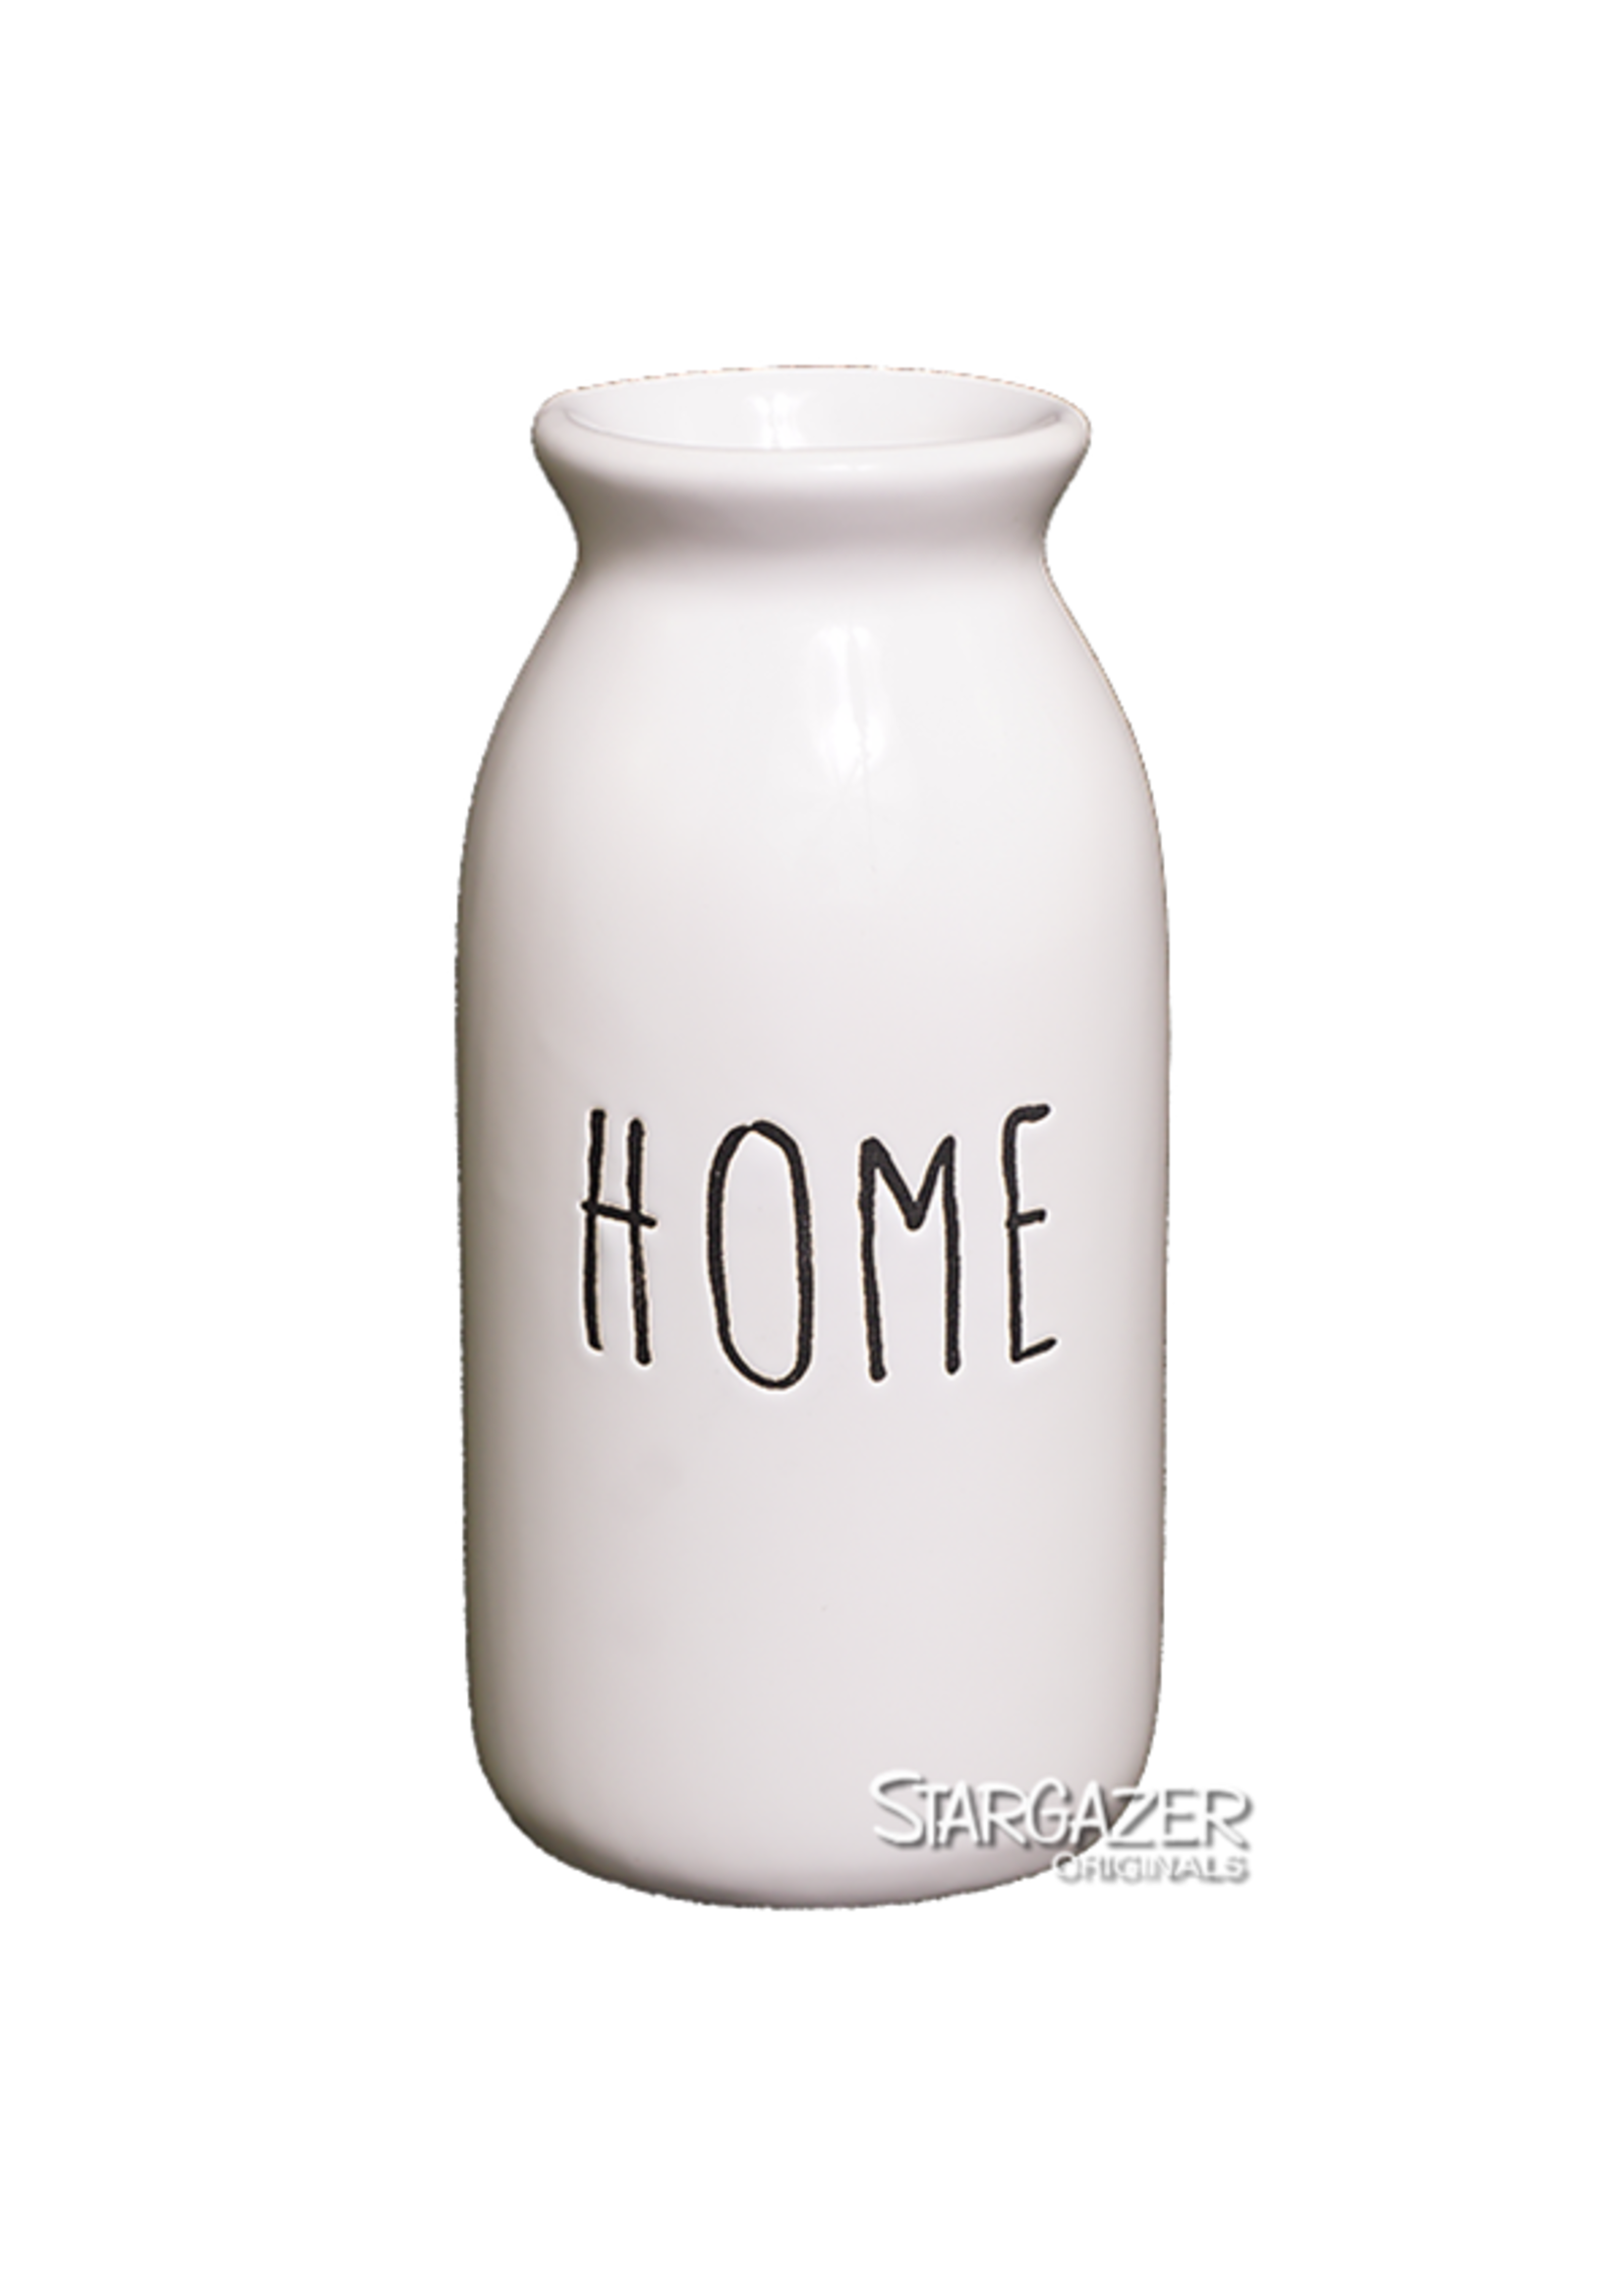 Ceramic Vase Home